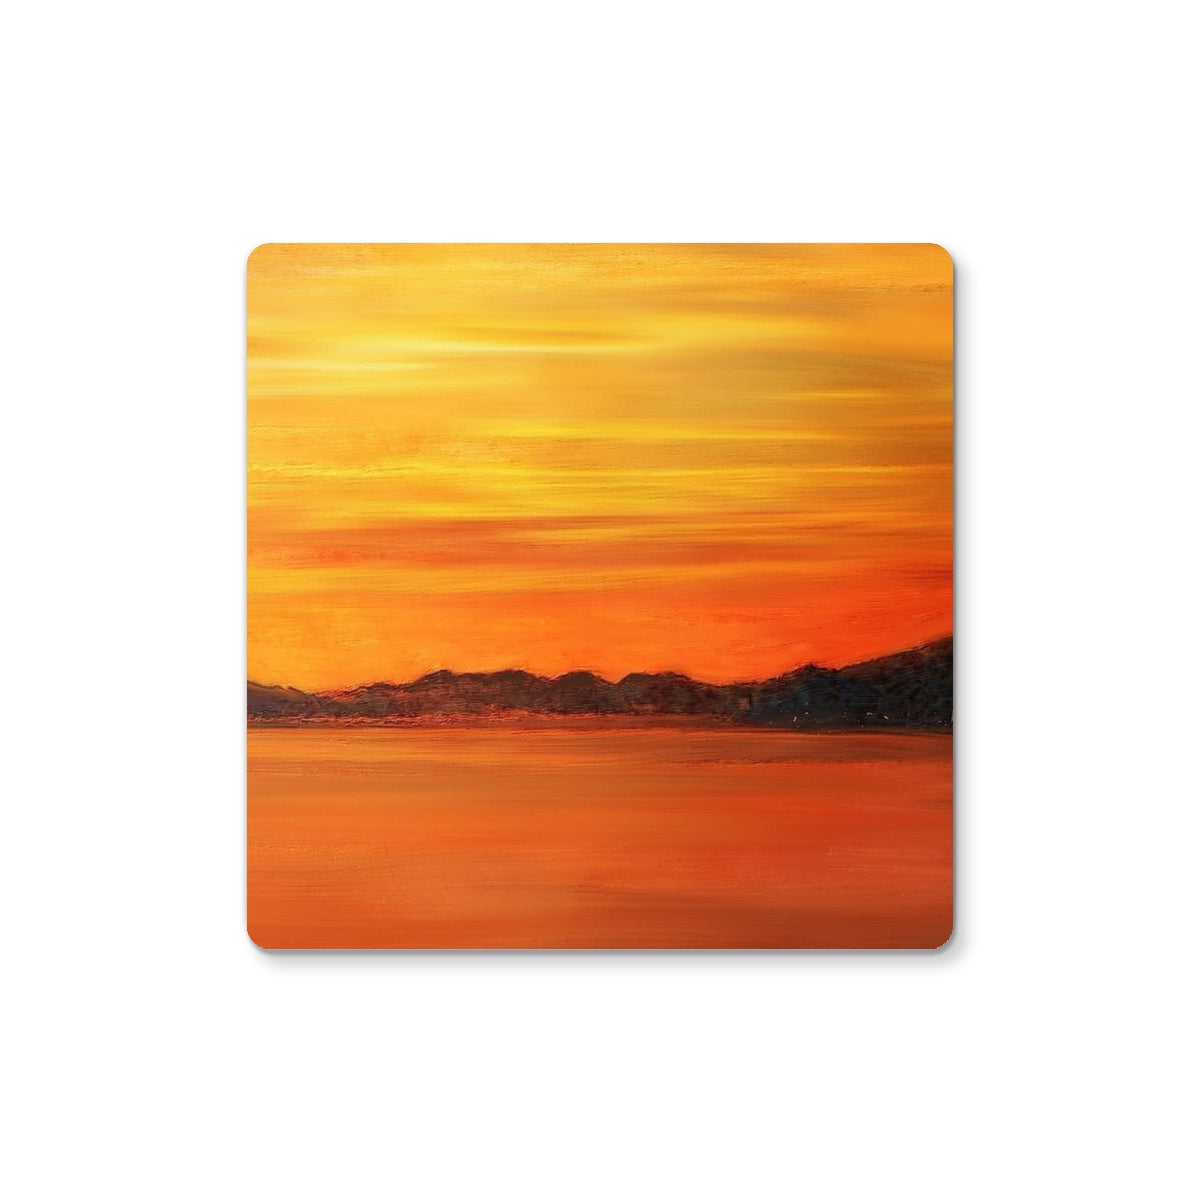 Loch Fyne Sunset Art Gifts Coaster-Homeware-Scottish Lochs & Mountains Art Gallery-Single Coaster-Paintings, Prints, Homeware, Art Gifts From Scotland By Scottish Artist Kevin Hunter